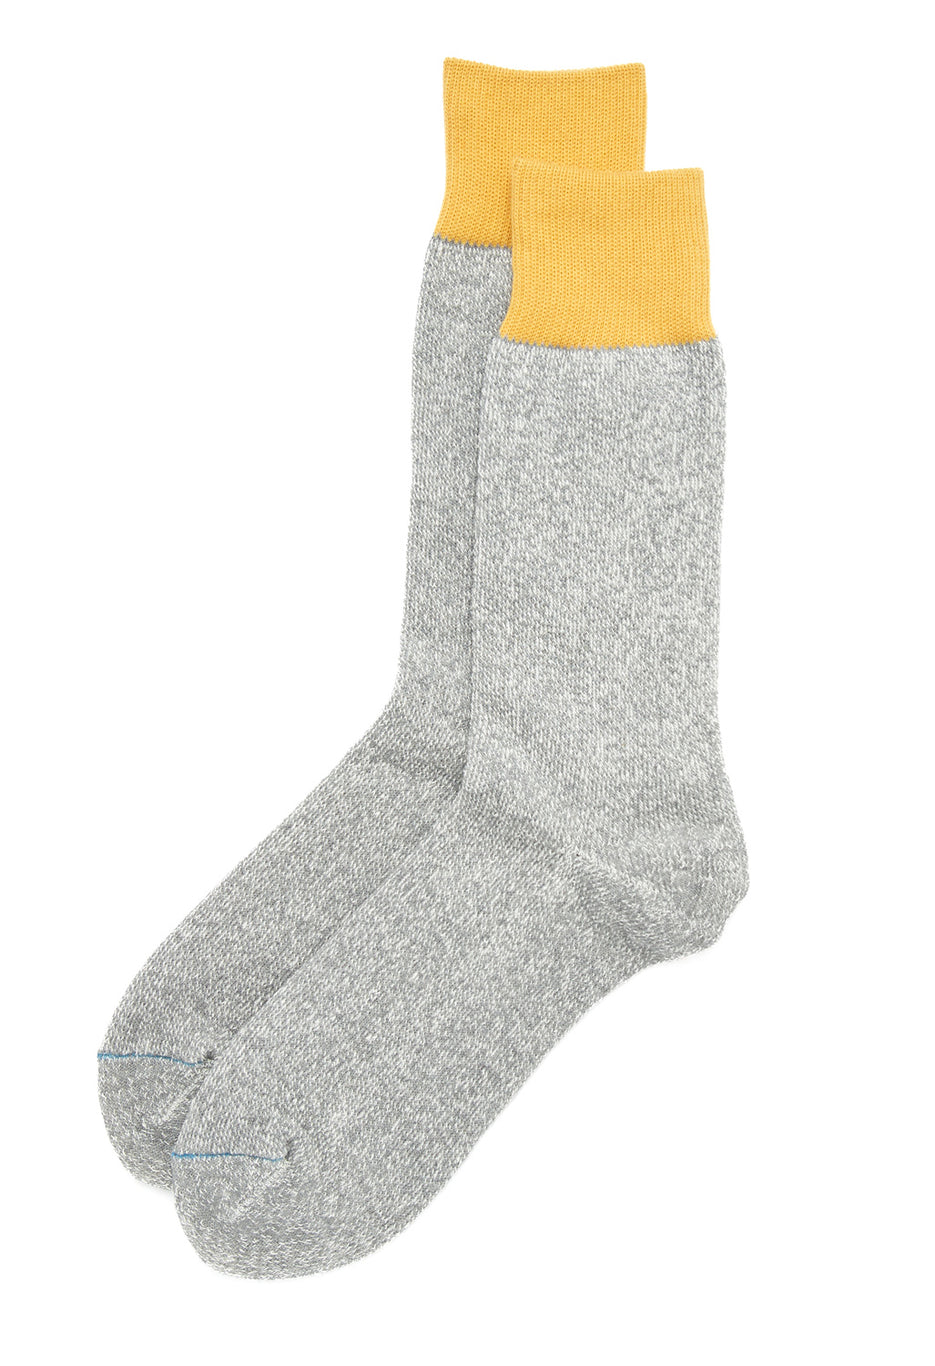 Rototo Silk & Cotton Double Face Crew Socks - Dark Yellow / Gray